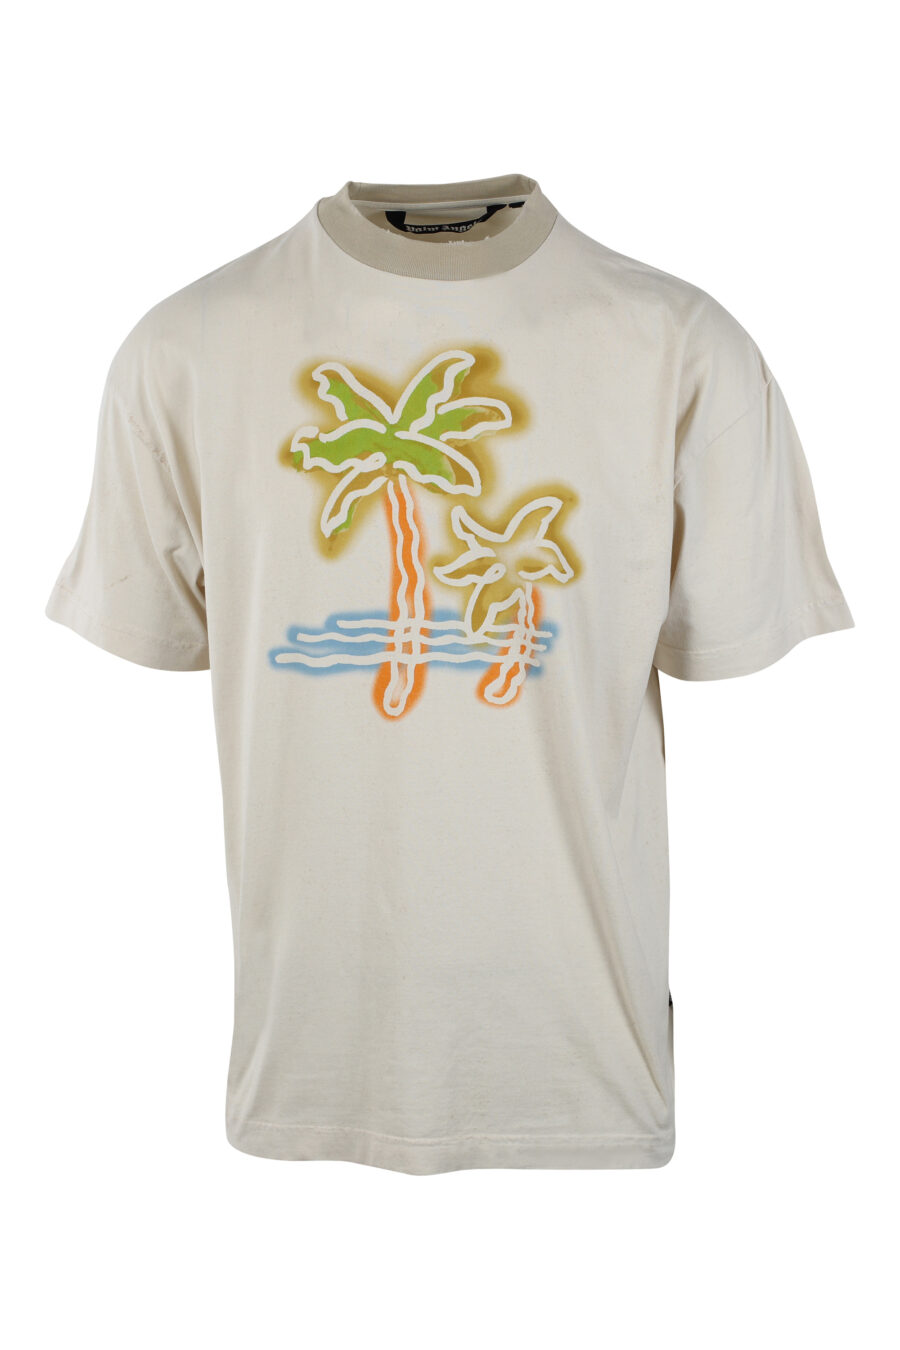 Beige T-shirt with multicoloured palm tree maxilogo and logo on the back - IMG 2593